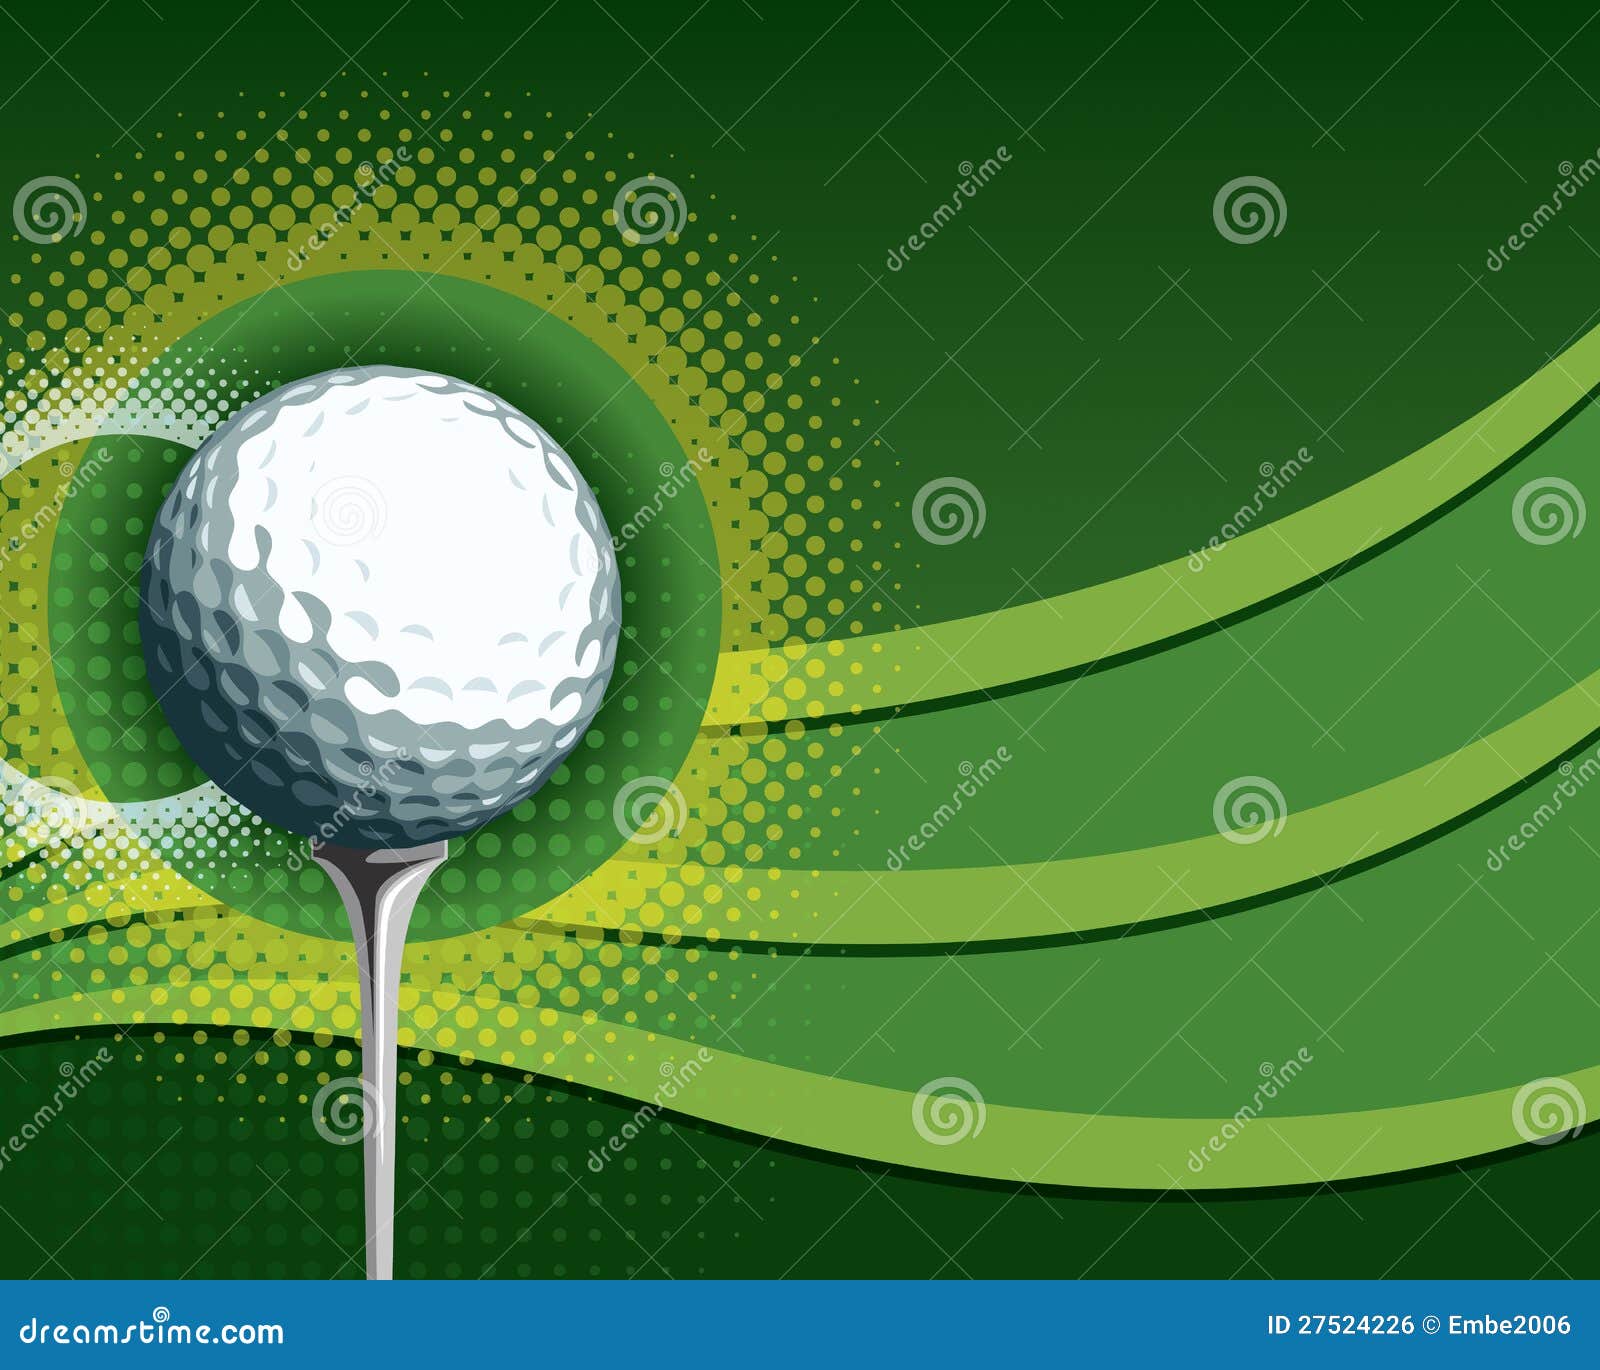 Golf background stock vector. Illustration of invitation - 27524226